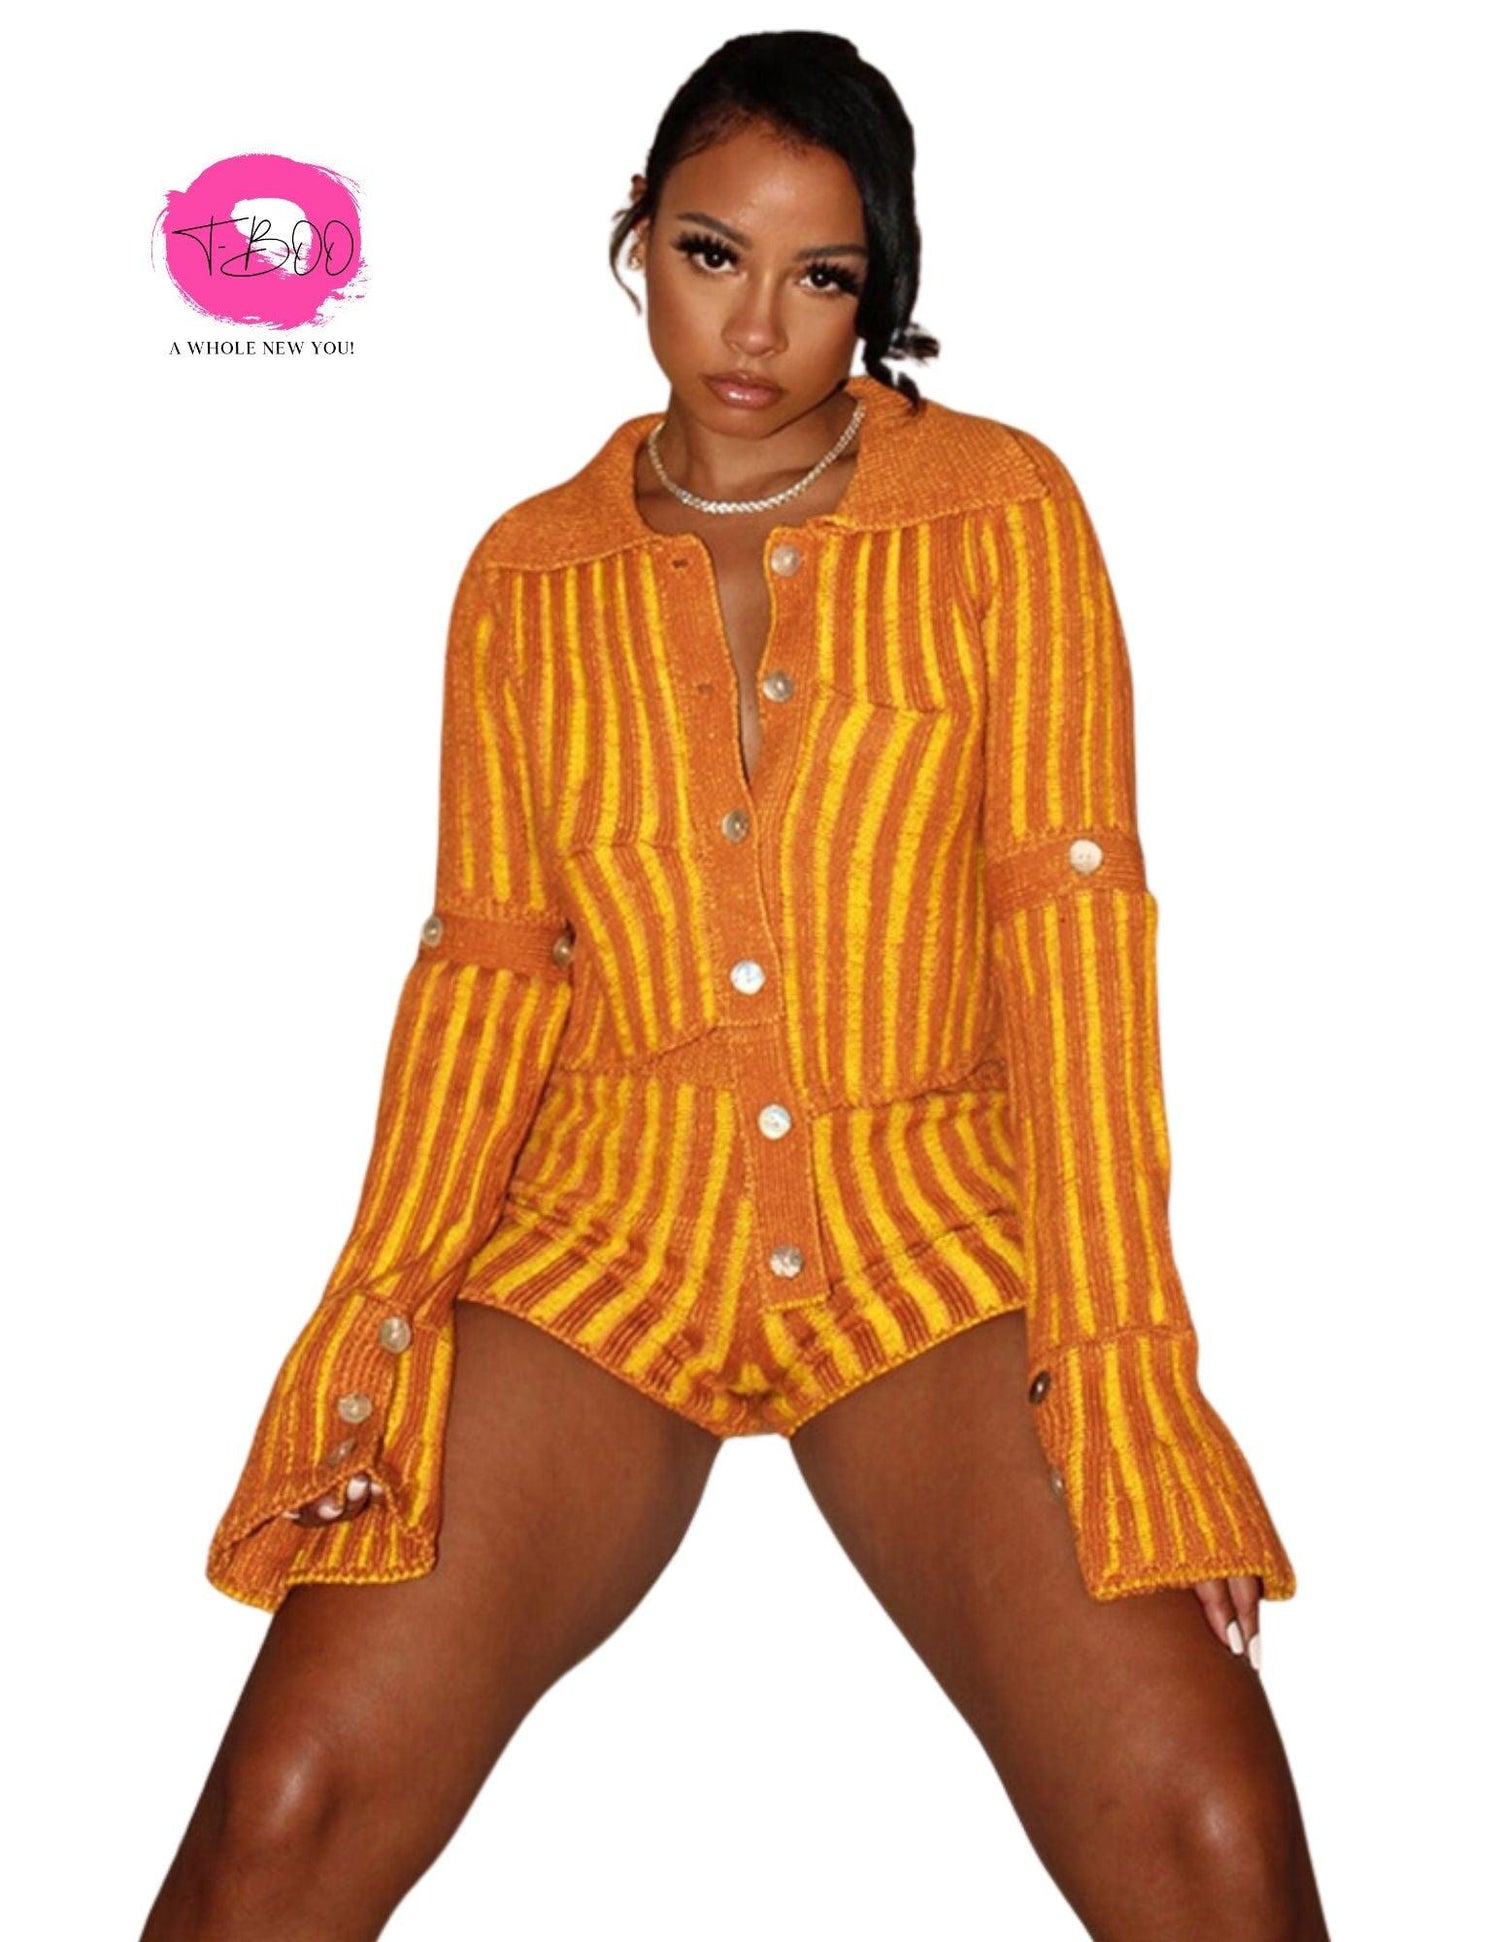 T-BOO 2 Piece Set Women Striped Crochet Casual Wear Long Sleeve Skinny Button Tops+High Waist Bottoms Matching Street Sportswear